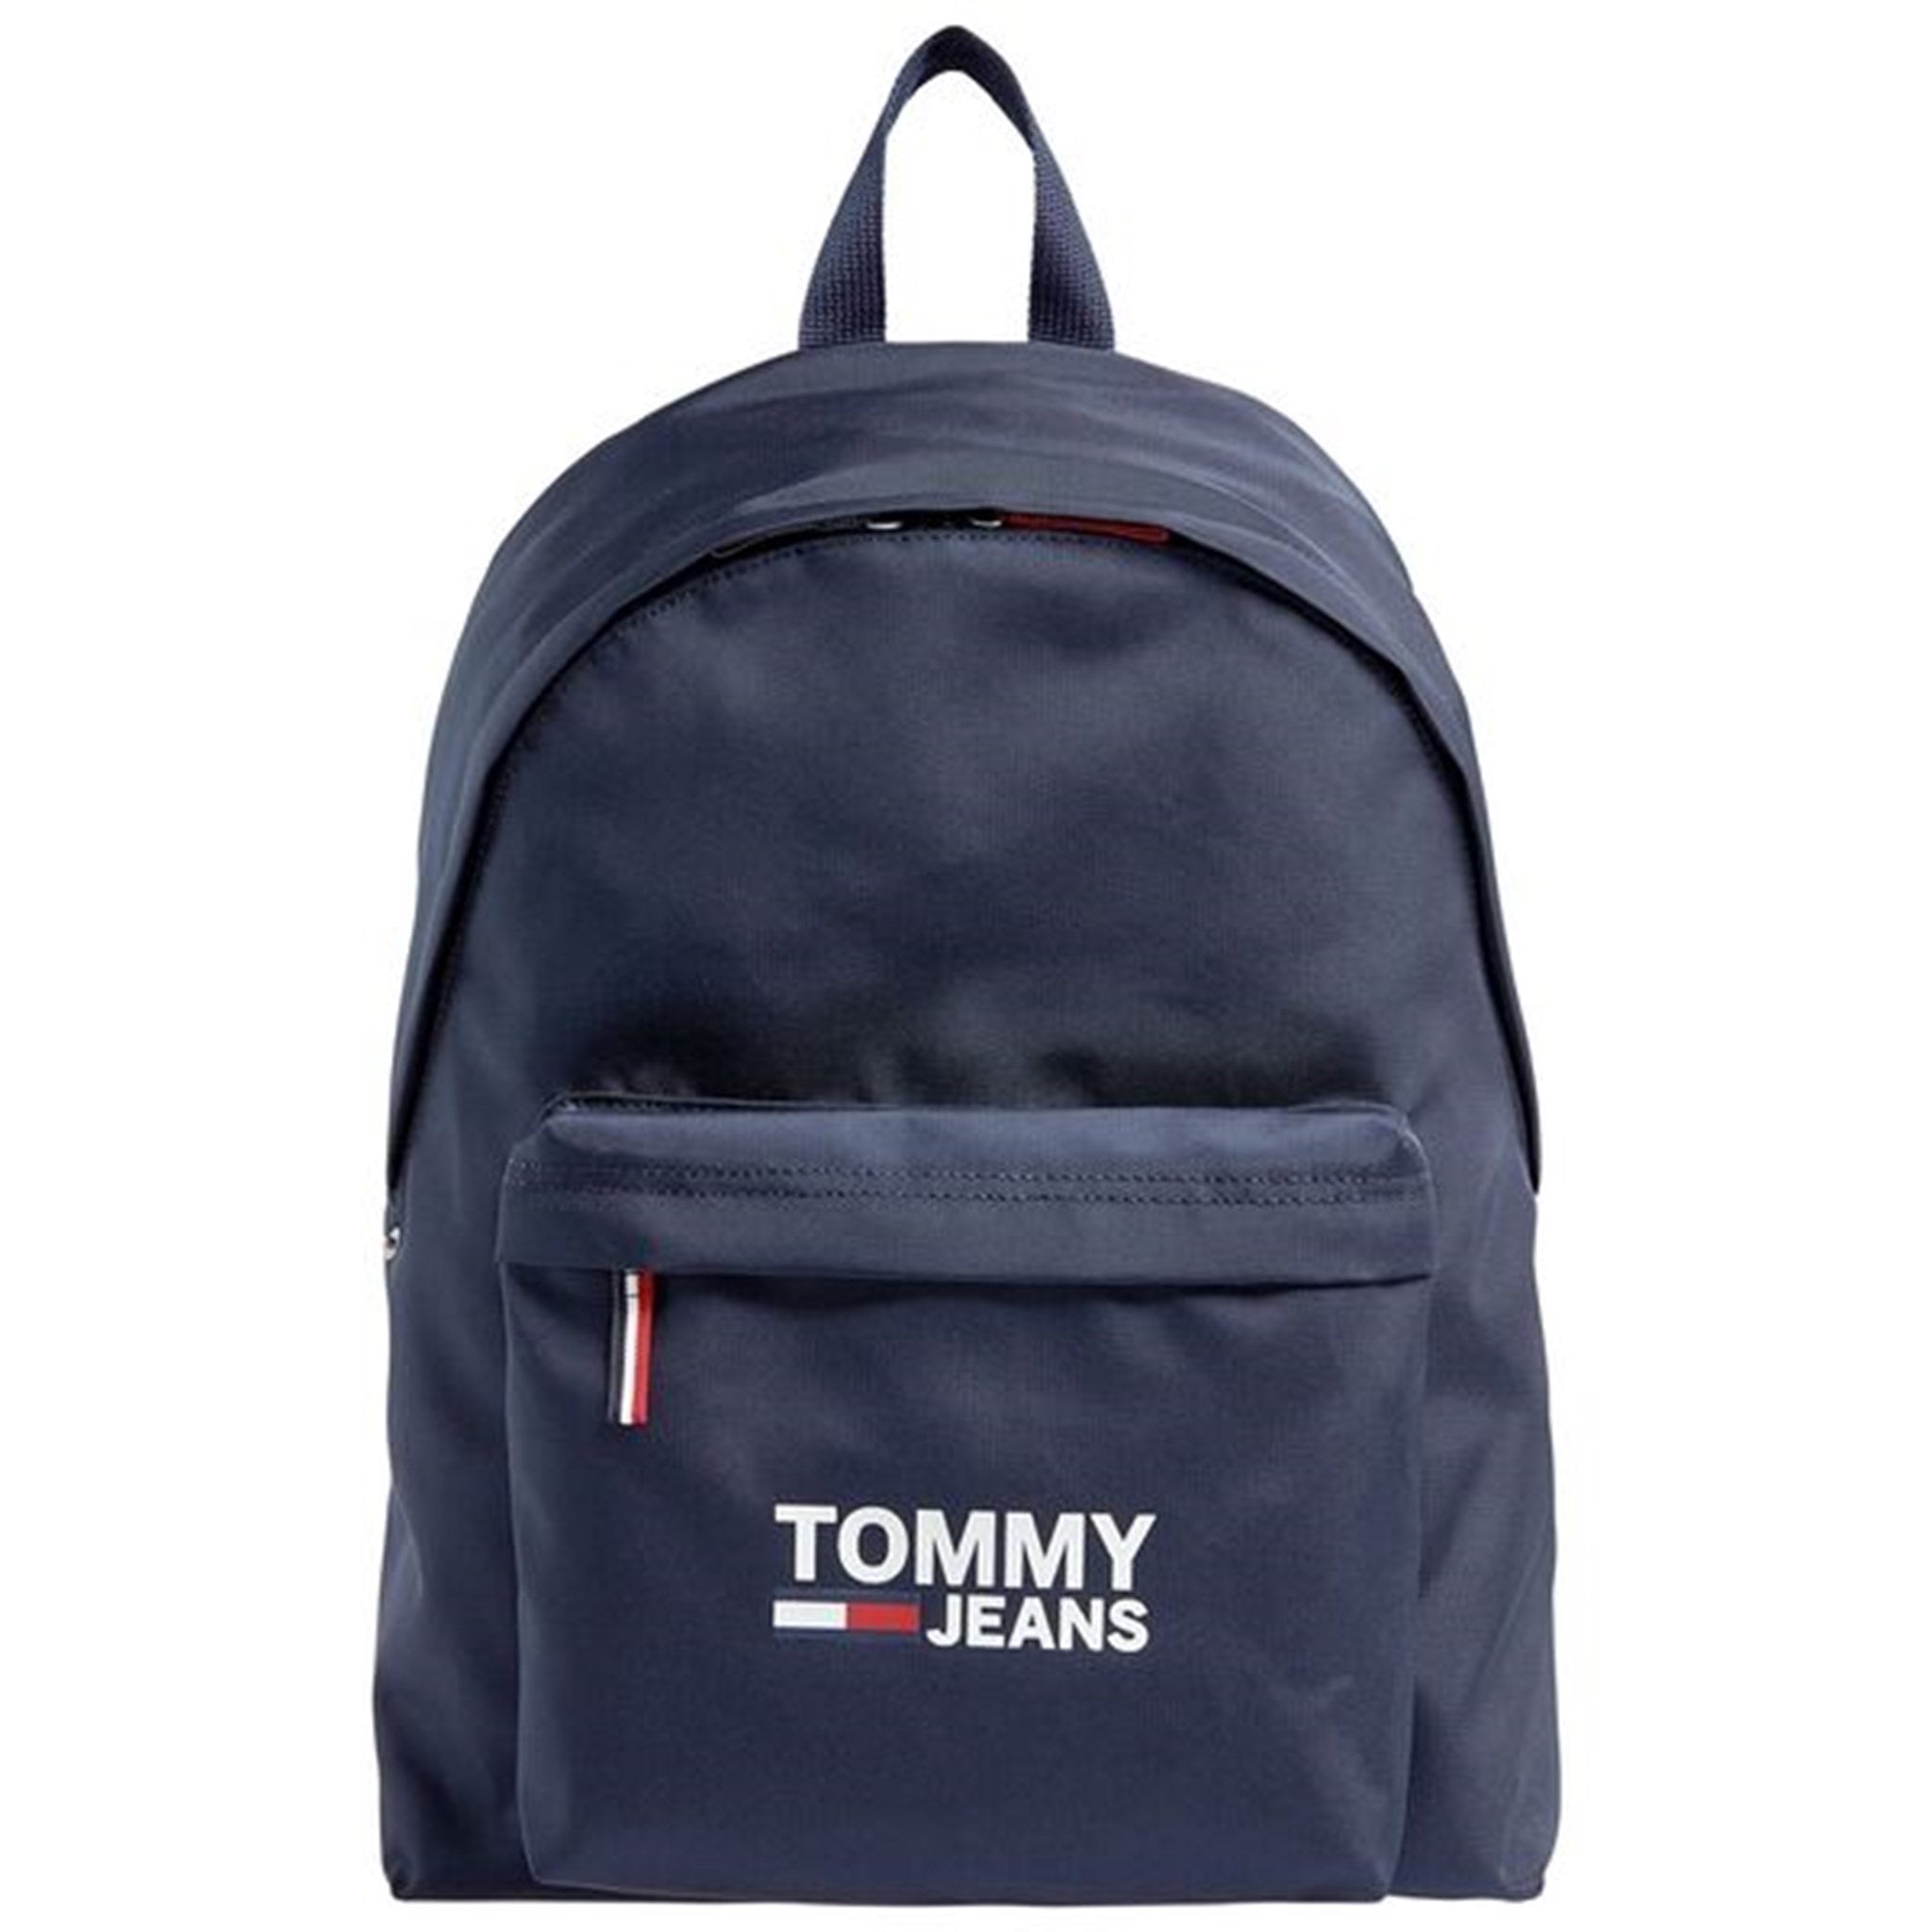 Tommy Hilfiger Cool City Backpack Black Iris